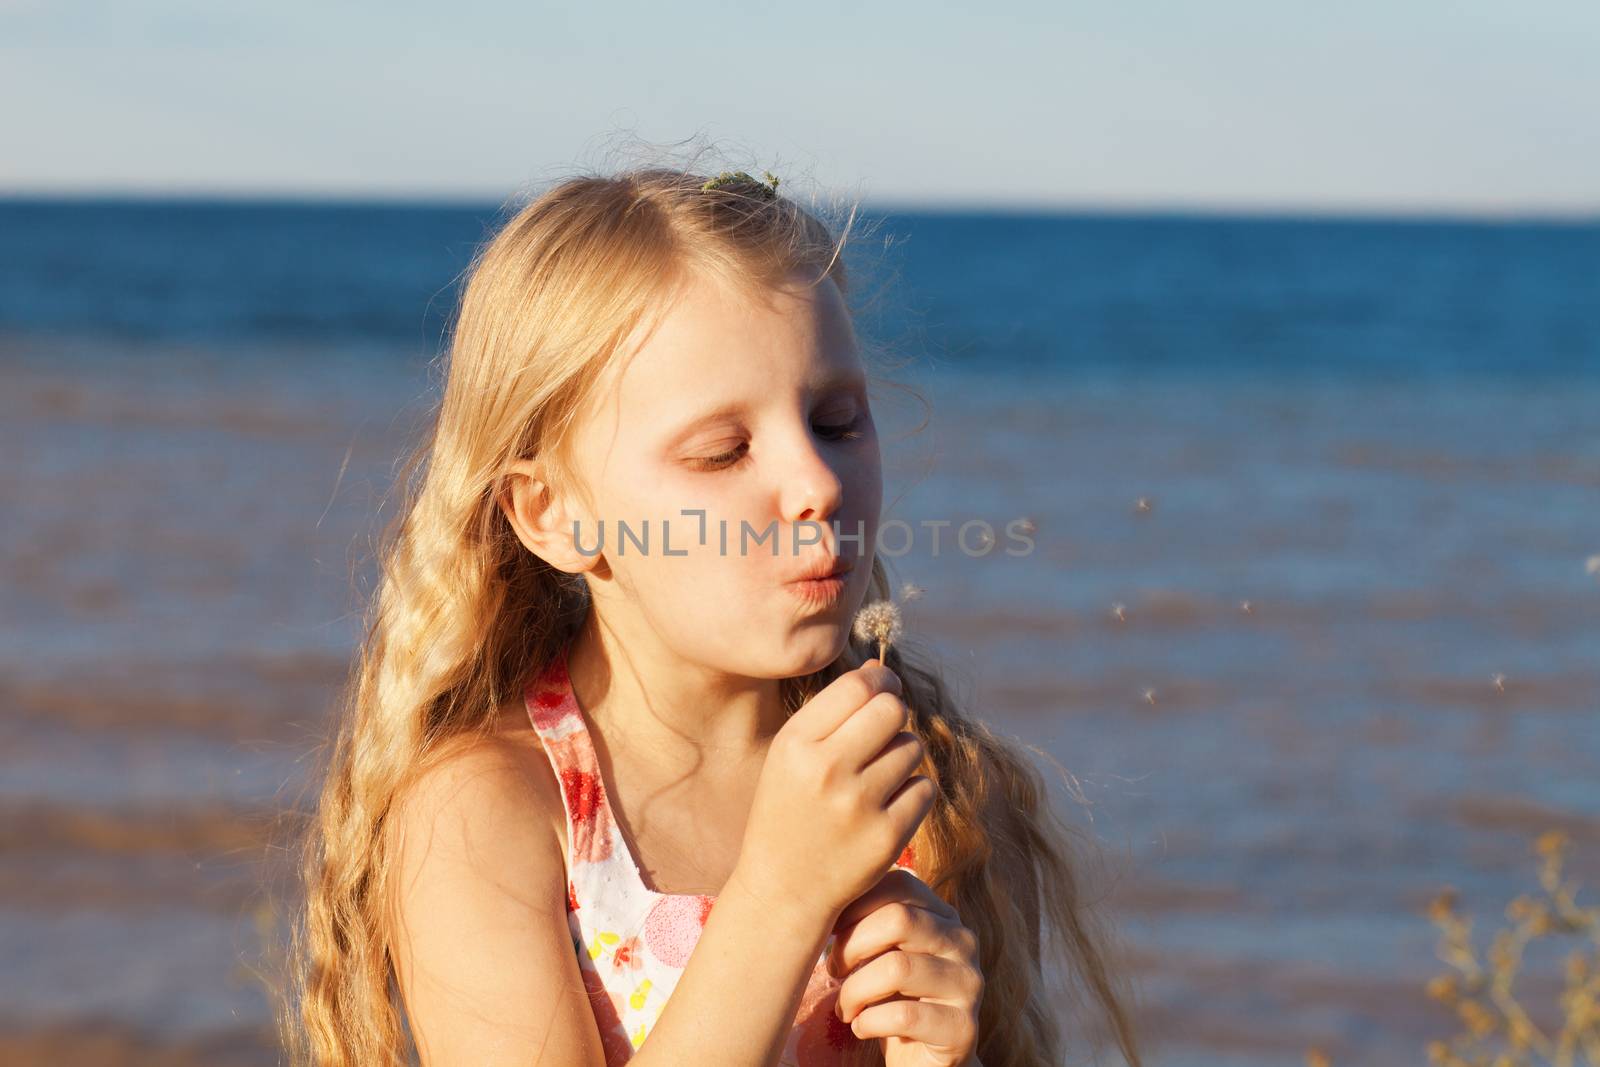 gilrl blowing on dandelion on the seashore